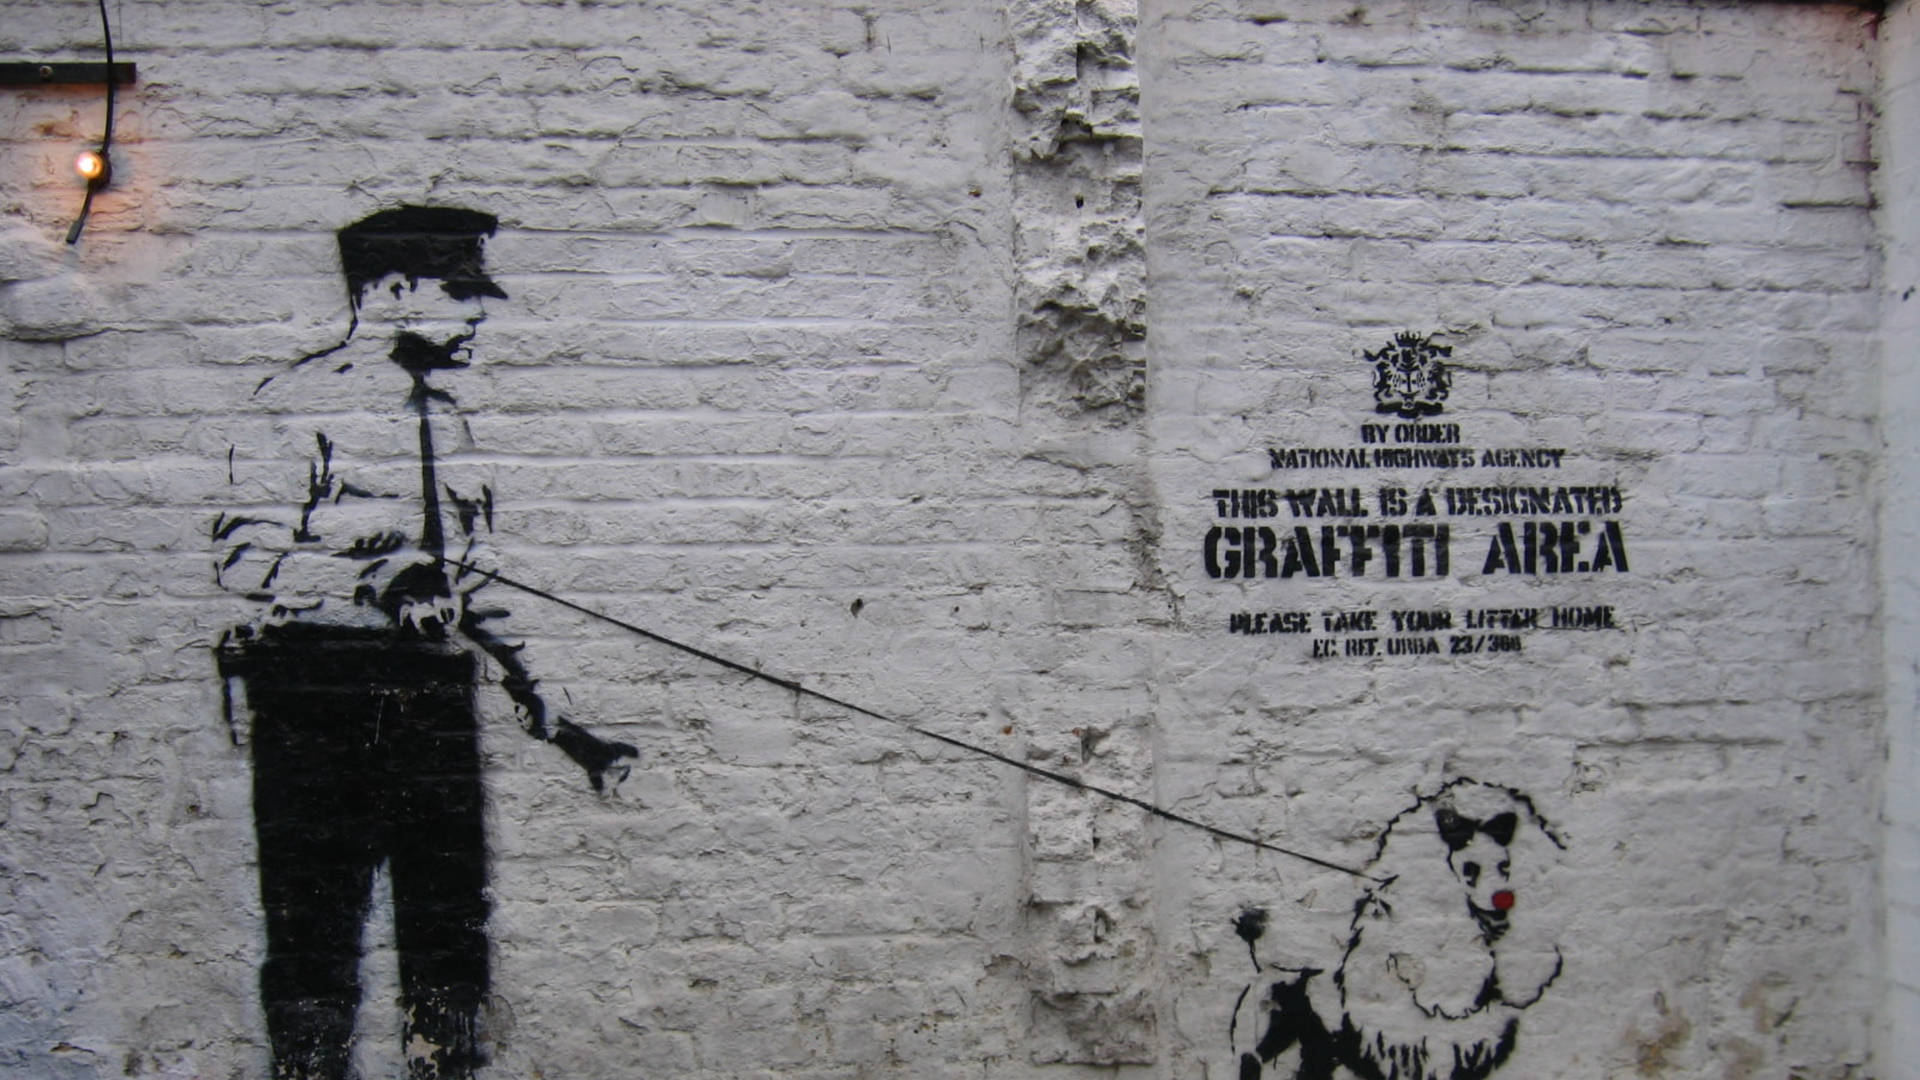 Banksy Designated Graffiti Area Background